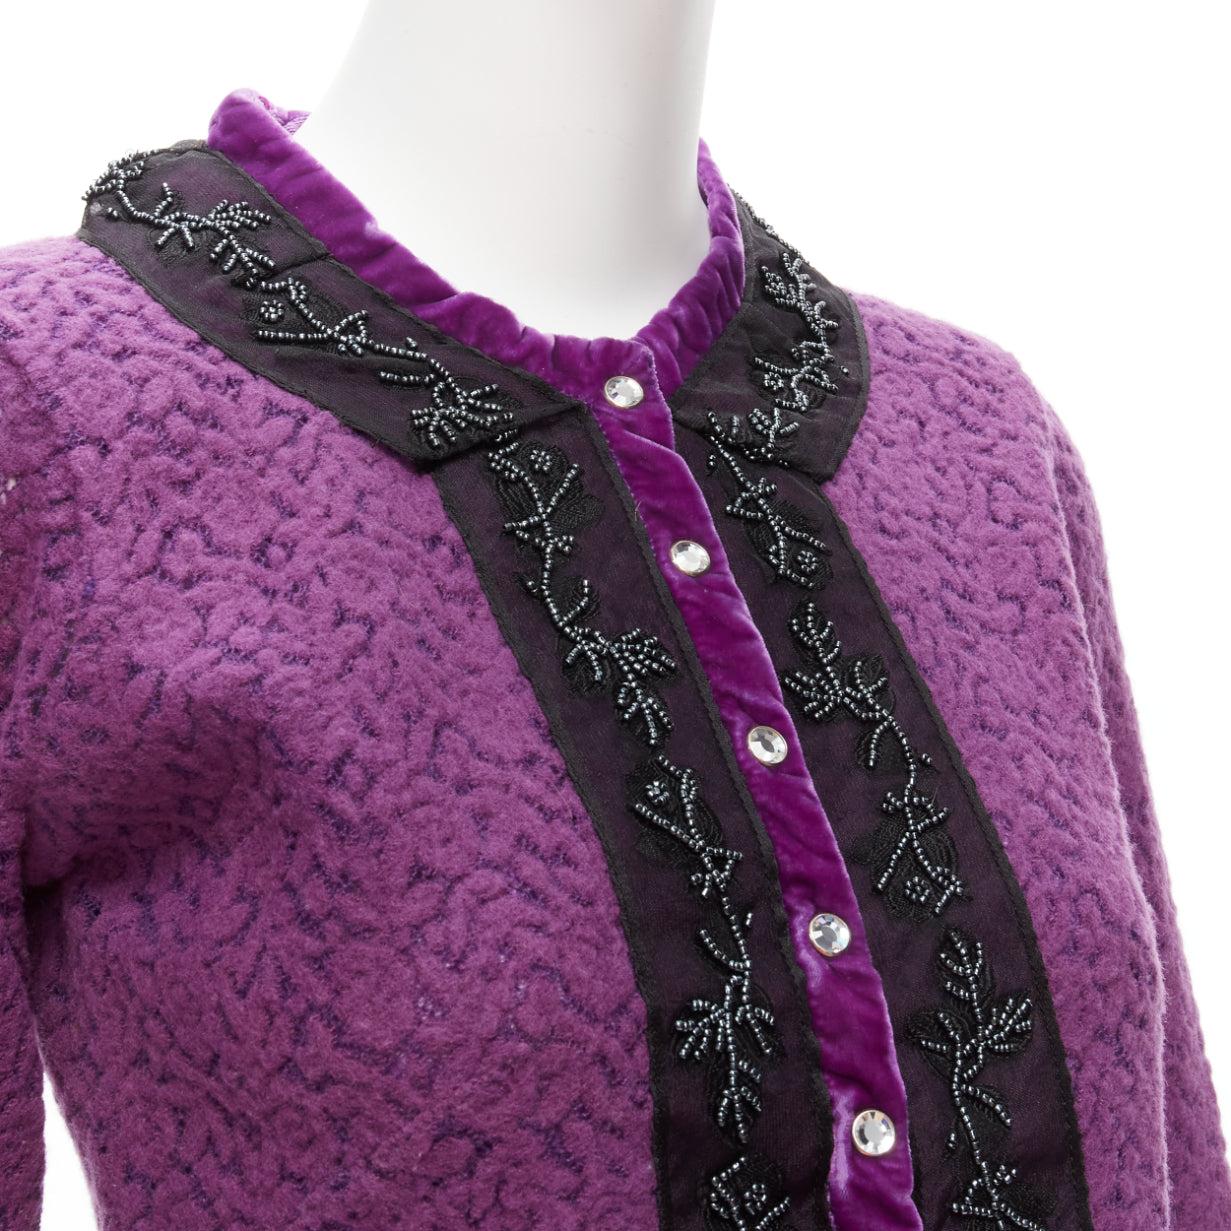 VOYAGE INVEST IN THE ORIGINAL LONDON purple wool cotton black lace velvet trim cardigan M
Reference: GIYG/A00322
Brand: VOYAGE INVEST IN THE ORIGINAL LONDON
Material: Wool, Cotton
Color: Purple, Black
Pattern: Lace
Closure: Snap Buttons
Extra